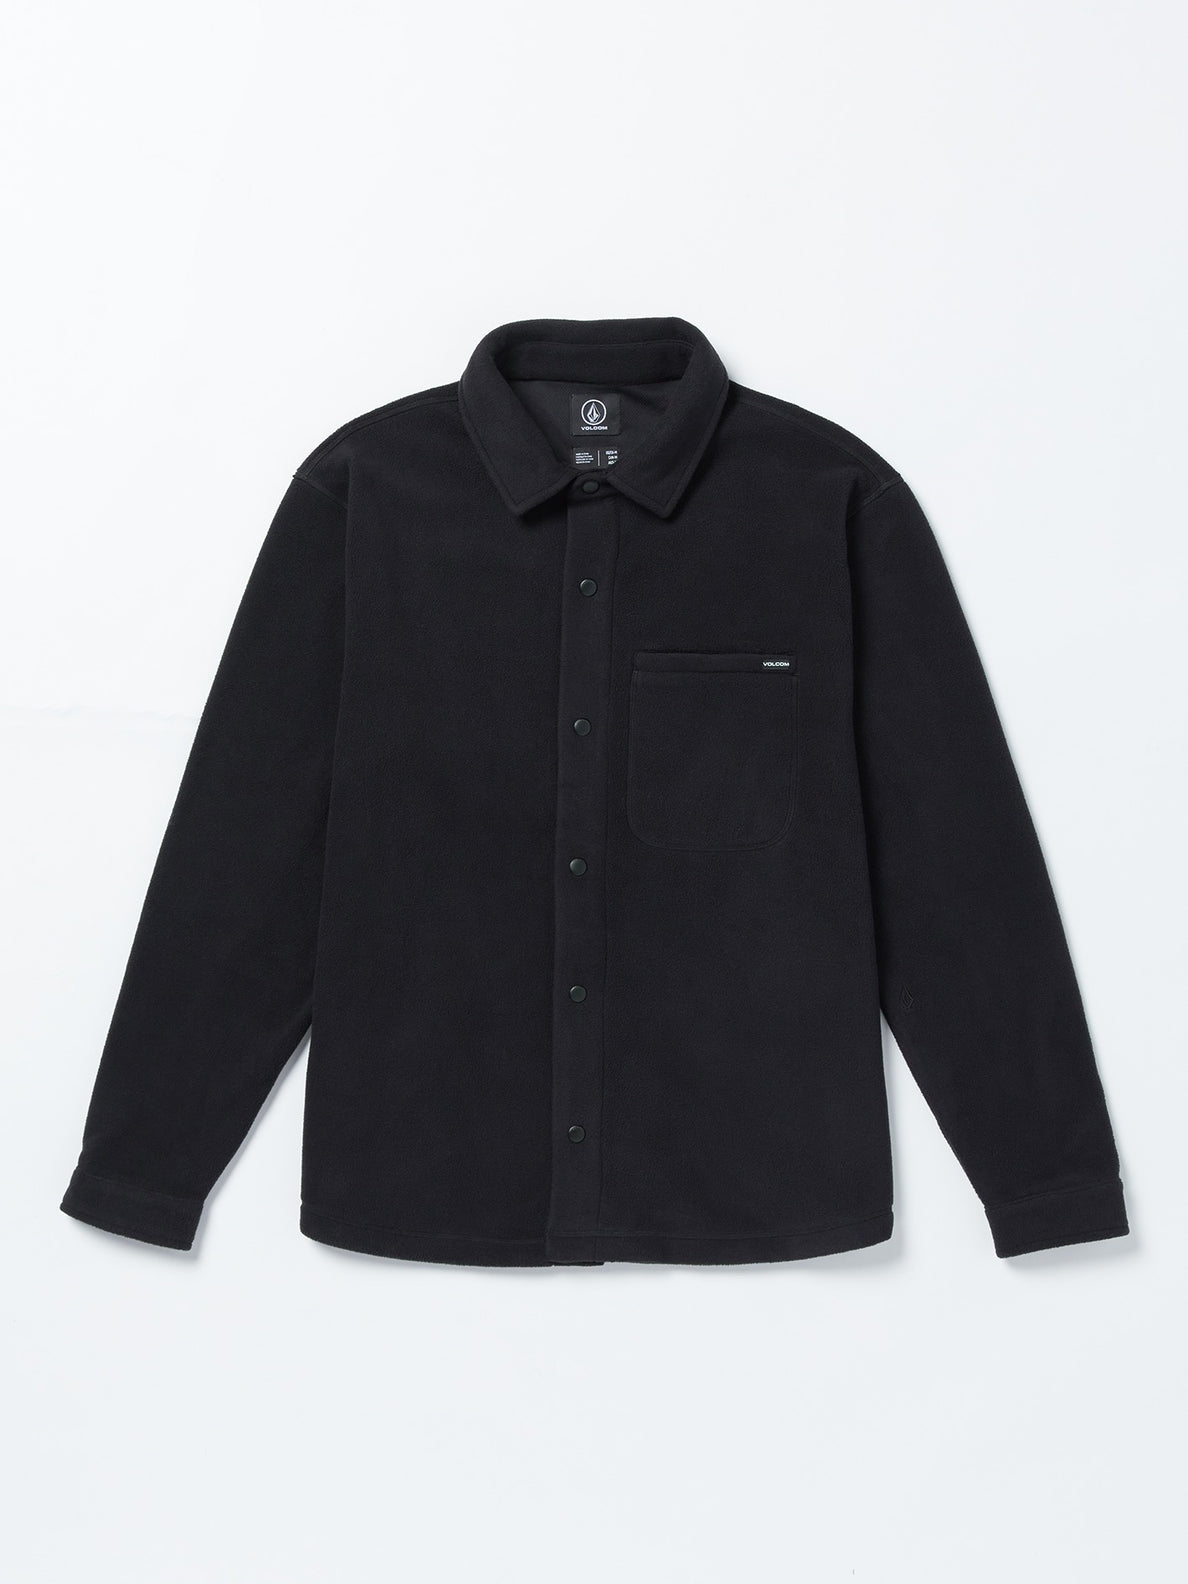 Bowered Light Long Sleeve Shirt - Black